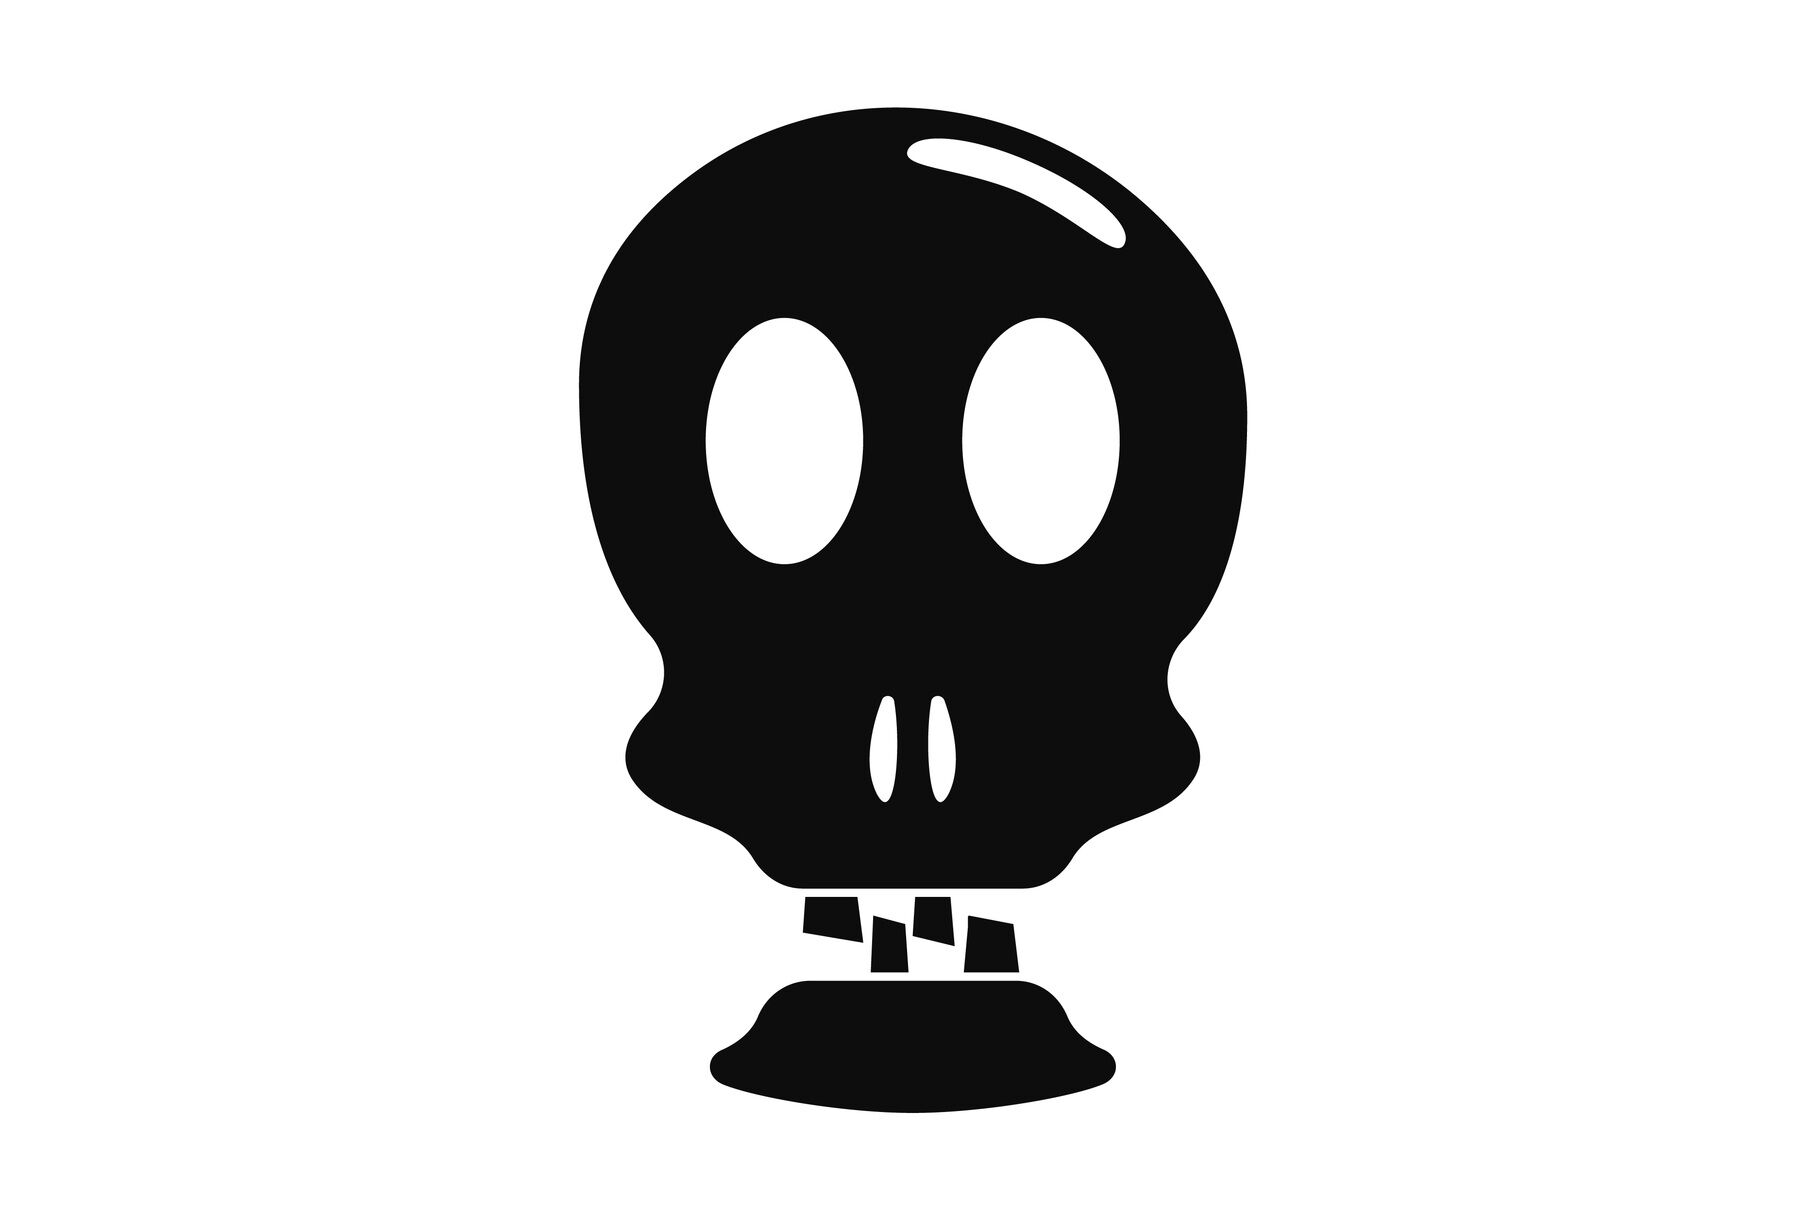 simple skull symbol